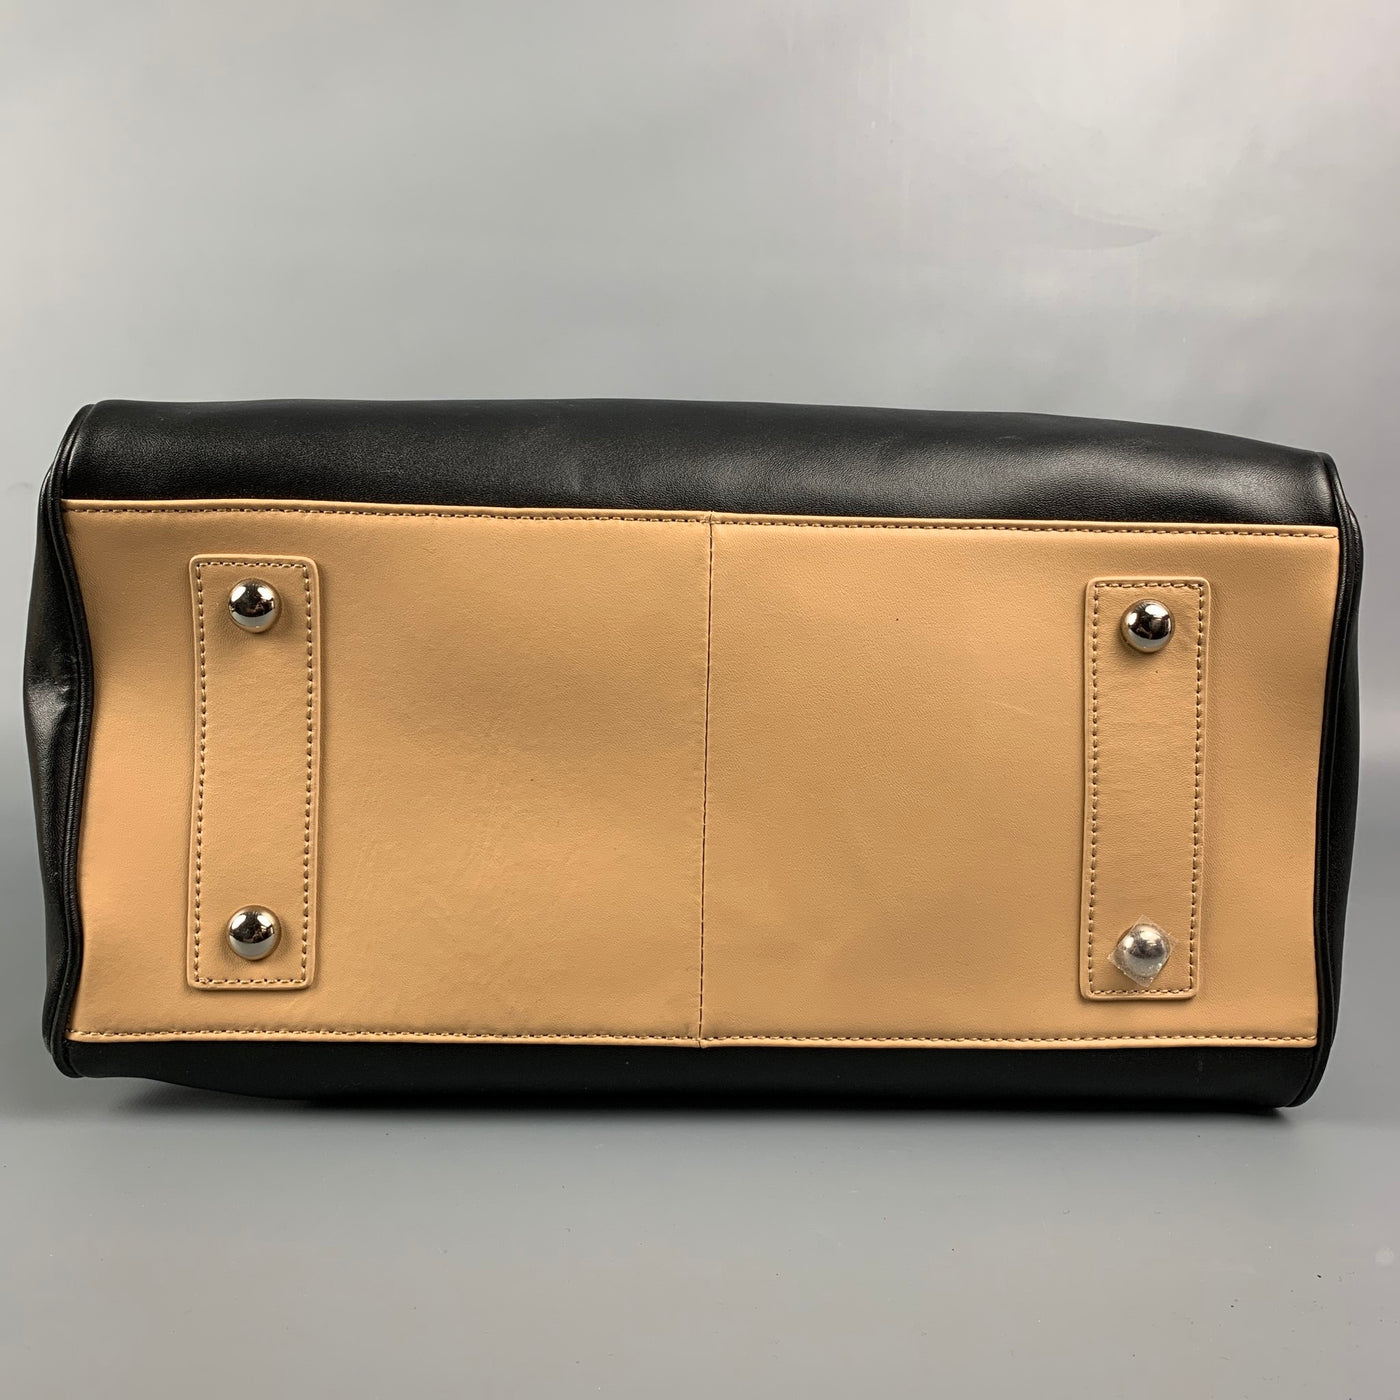 CHARLES JOURDAN Black & Tan Leather Tote Dalton Handbag